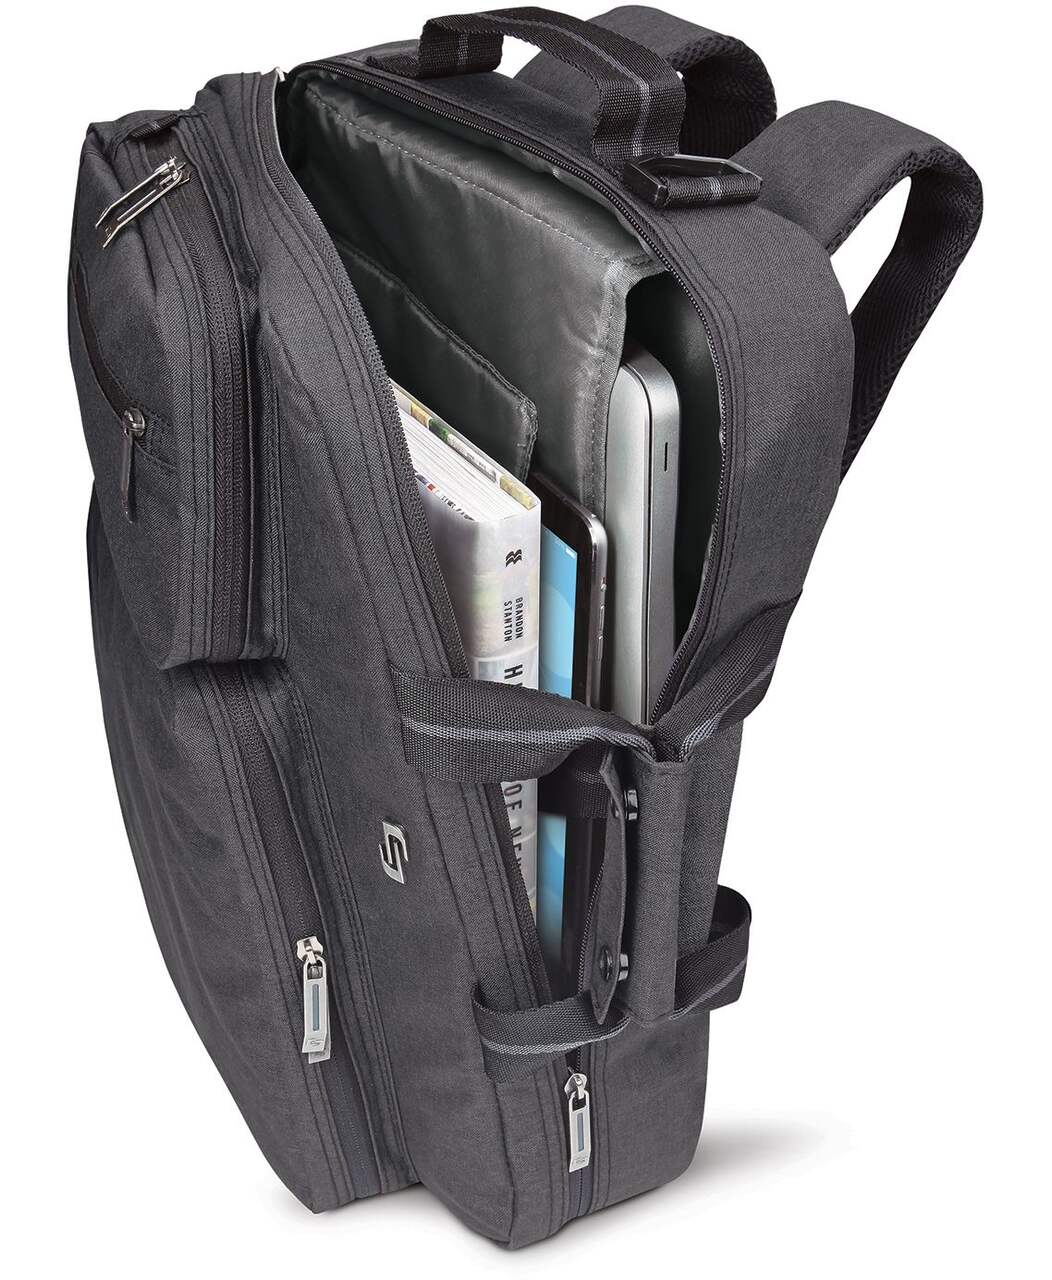 PKG International Robson Recycled Cross-Body Laptop Bag (Black/Gray, 12L)